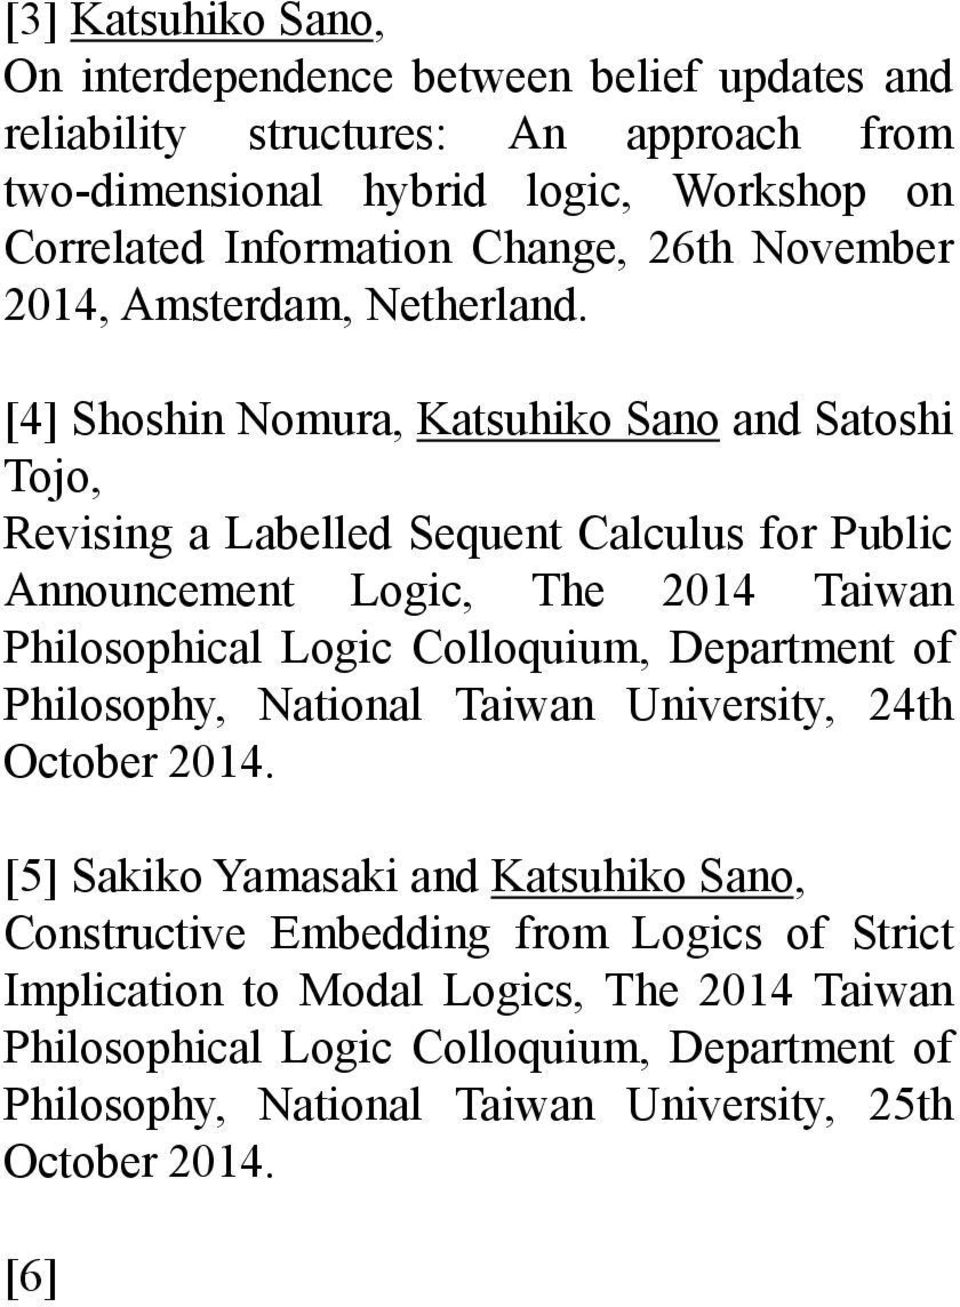 [4] Shoshin Nomura, Katsuhiko Sano and Satoshi Tojo, Revising a Labelled Sequent Calculus for Public Announcement Logic, The 2014 Taiwan Philosophical Logic Colloquium, Department of Philosophy,